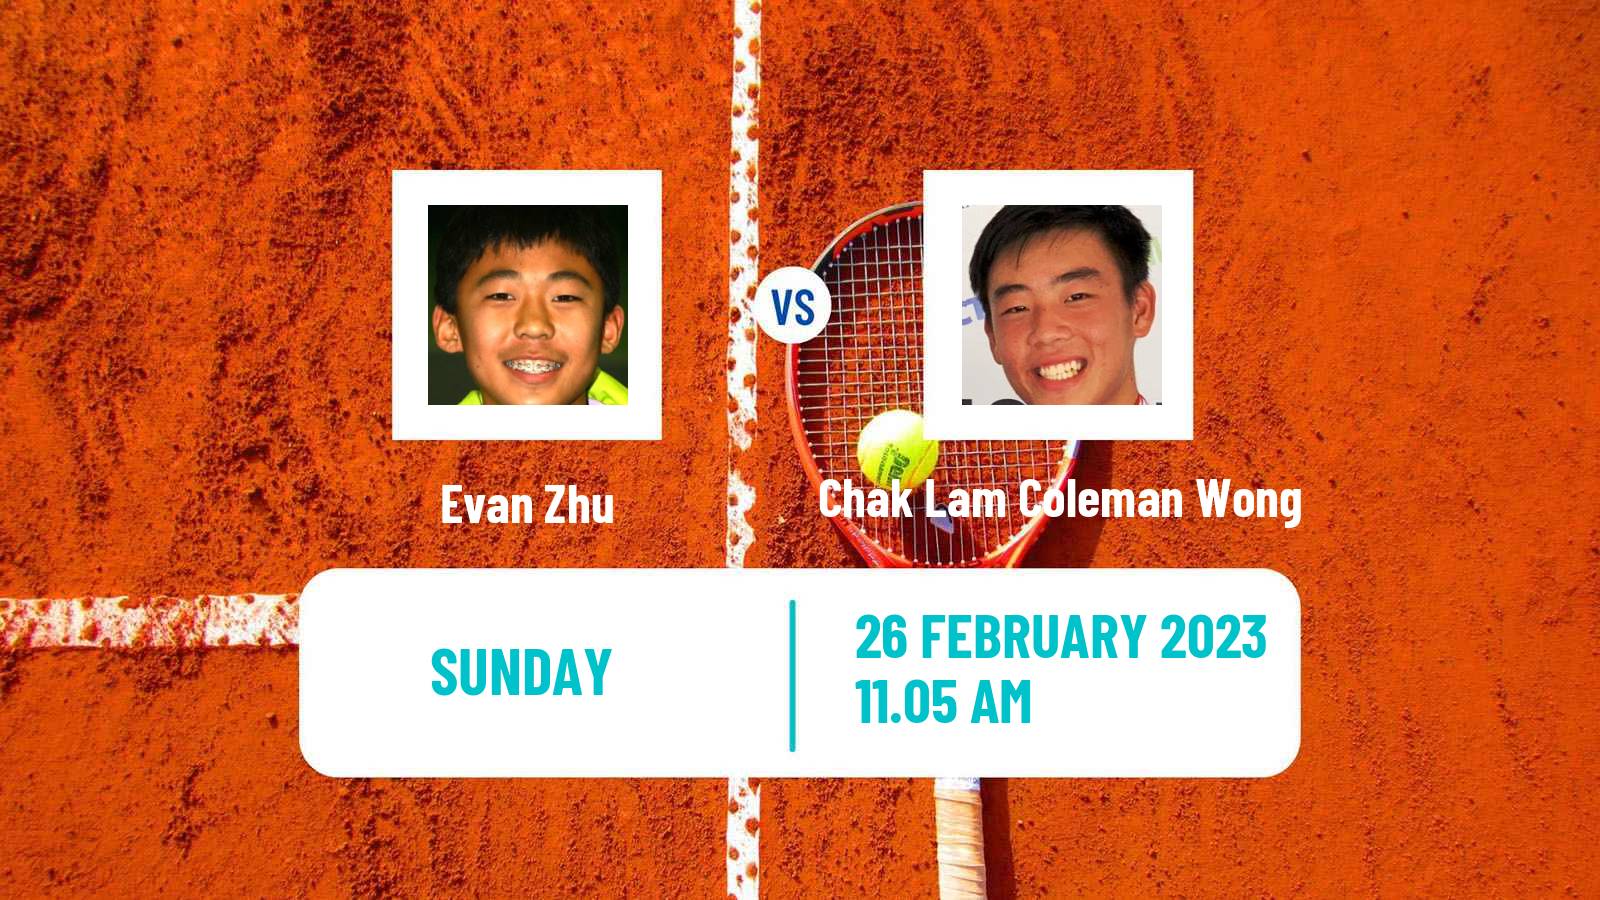 Tennis ATP Challenger Evan Zhu - Chak Lam Coleman Wong